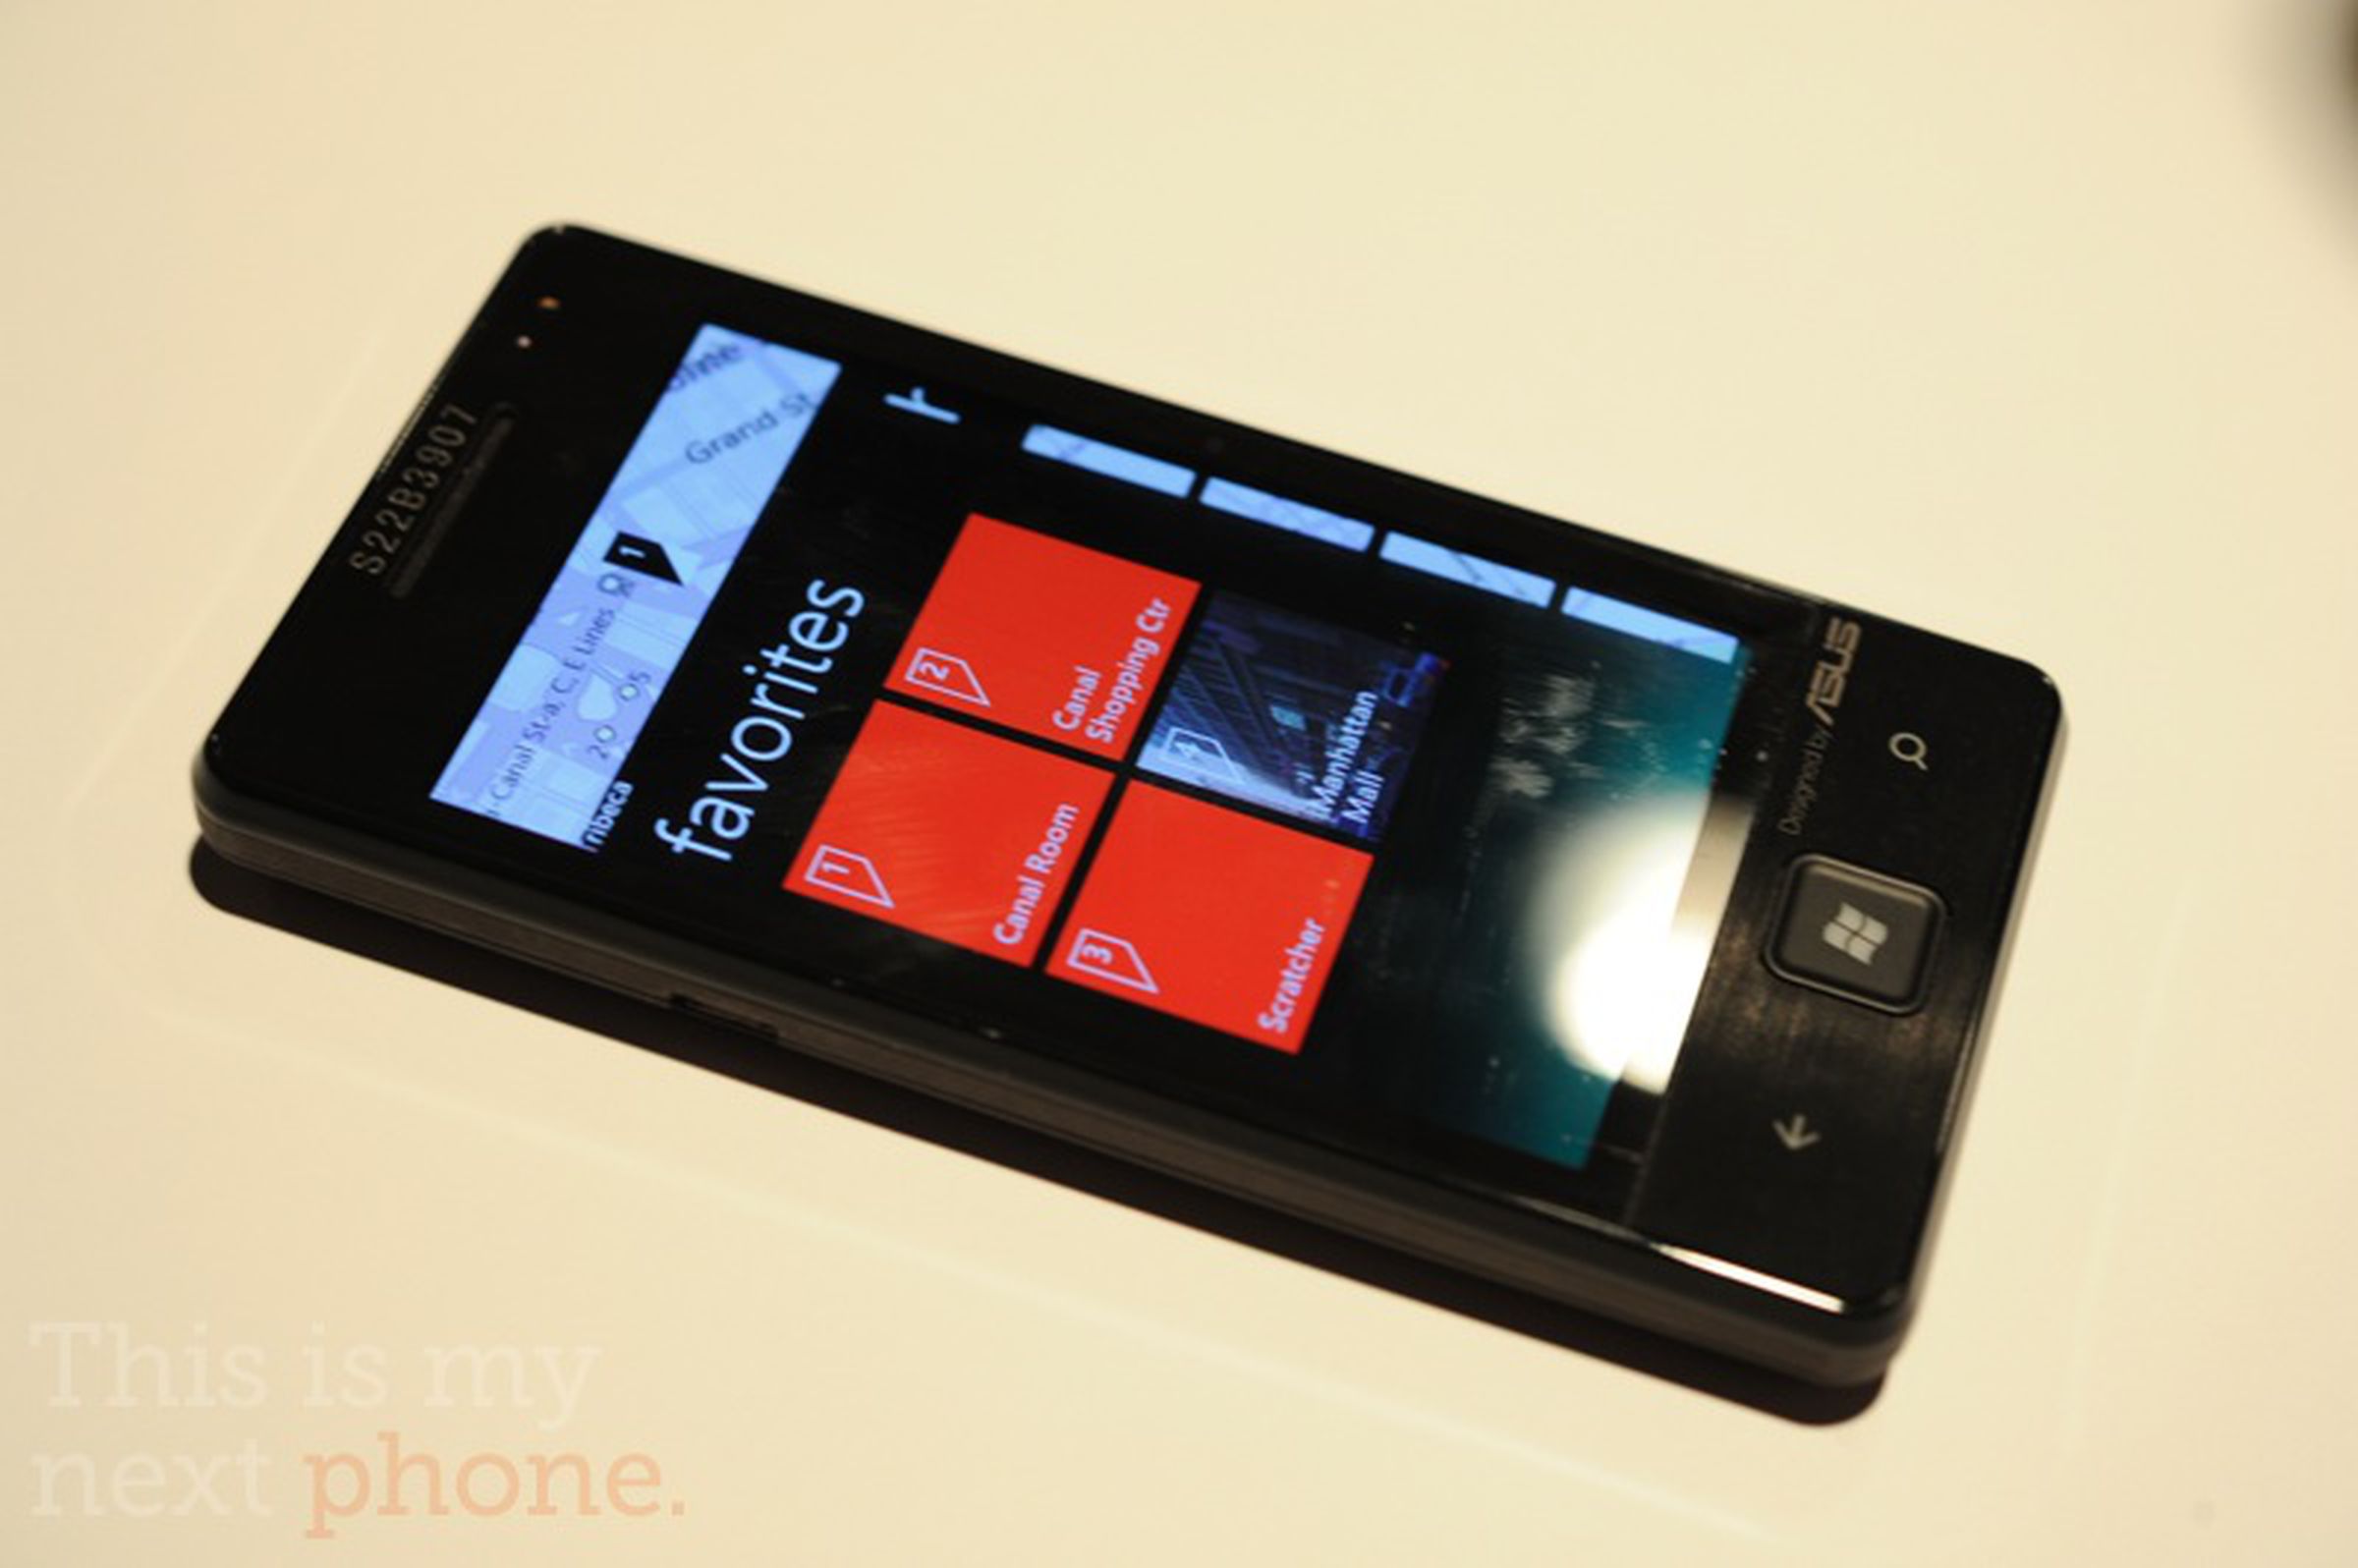 Windows Phone ‘Mango’ hands-on